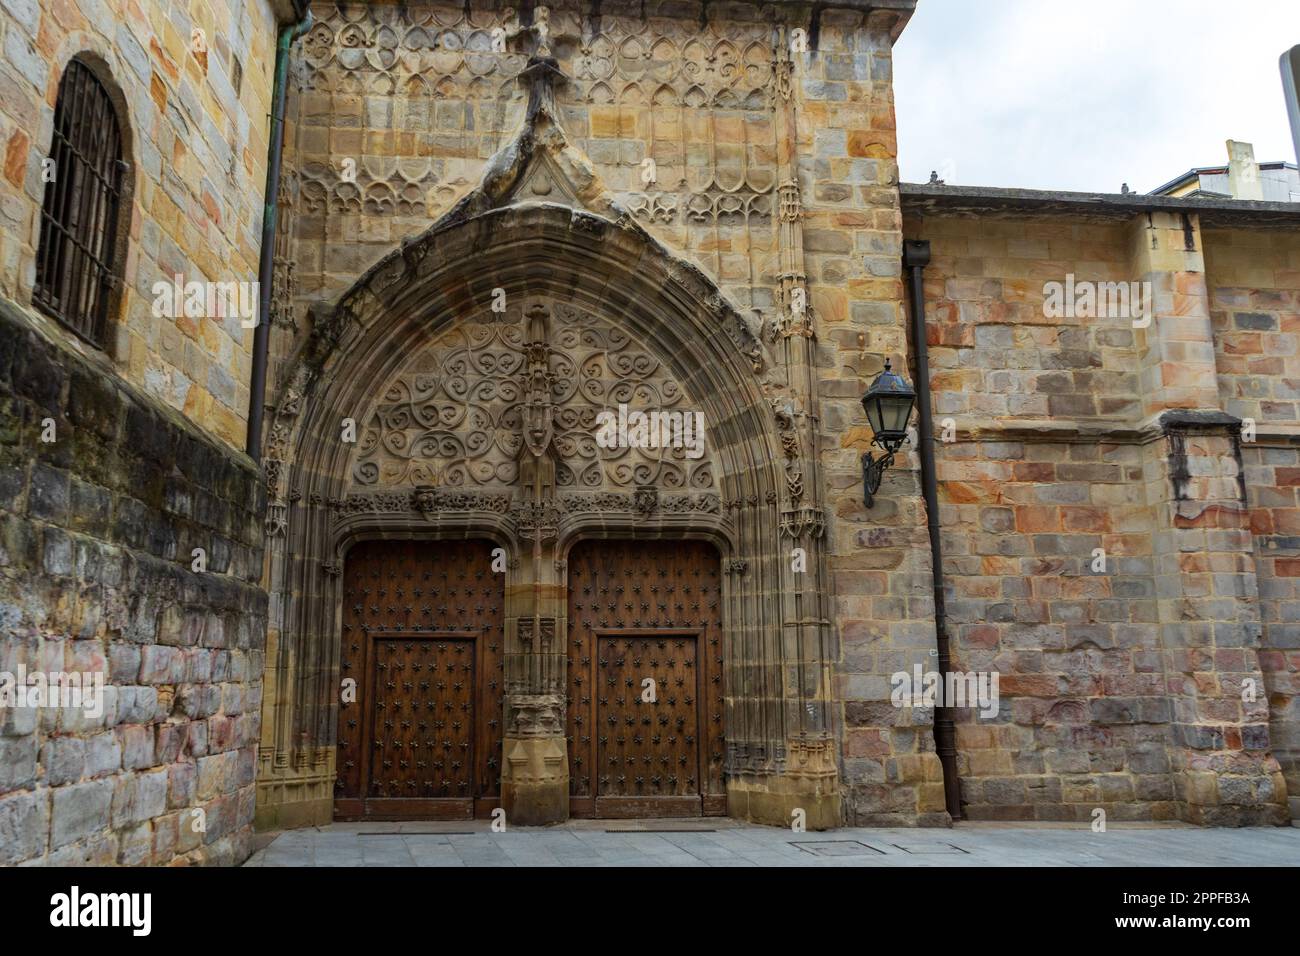 Fassade und Tore, alte Holztüren Kathedrale von Santiago, Bilbao, Spanien. Catedral de Santiago de Bilbao Stockfoto